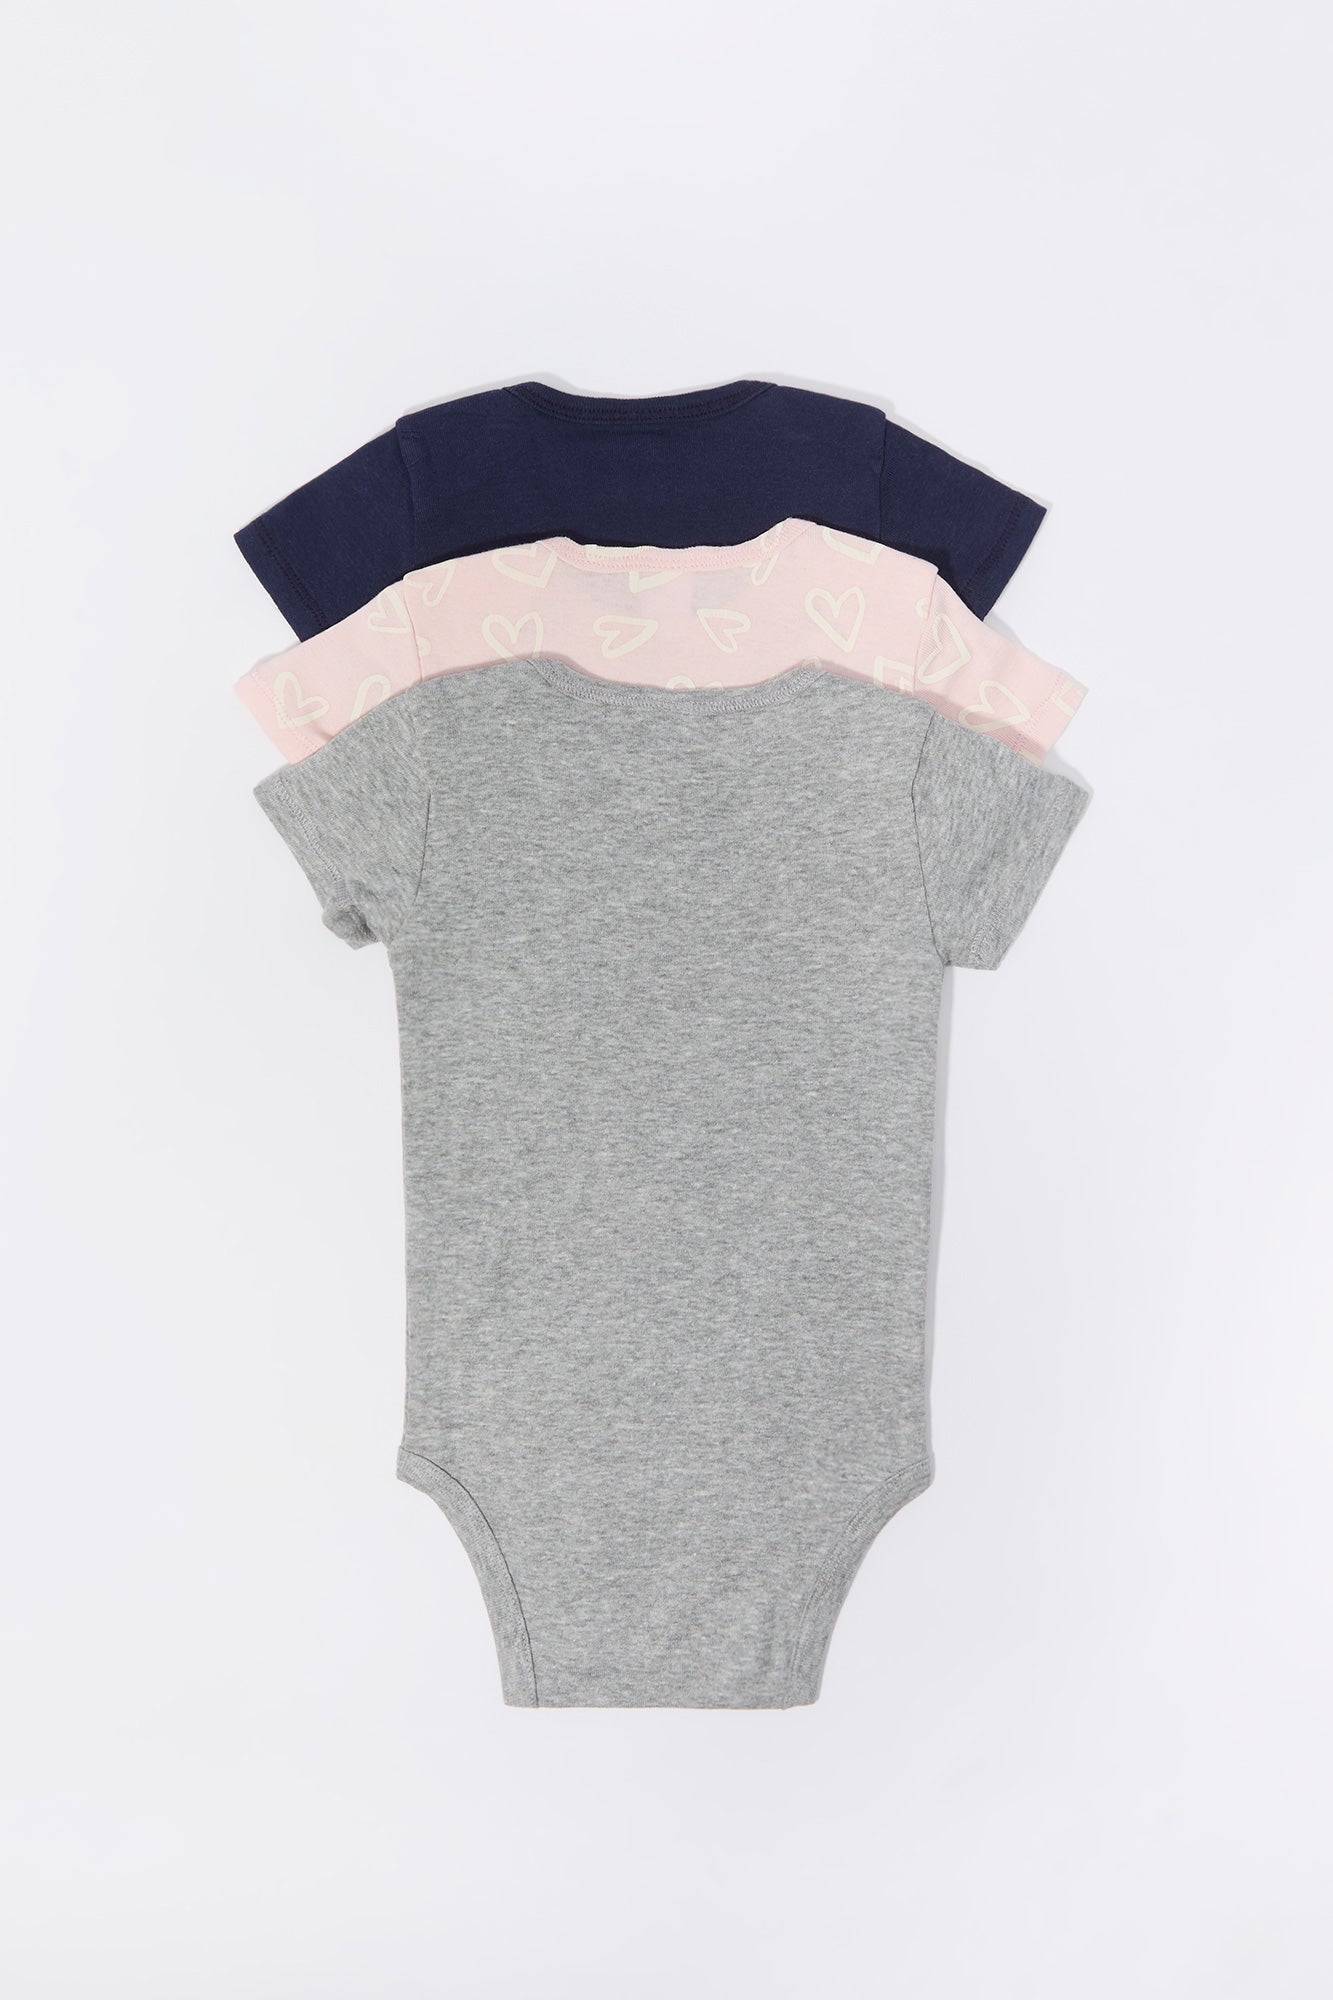 Baby Love Graphic Bodysuit (3 Pack)